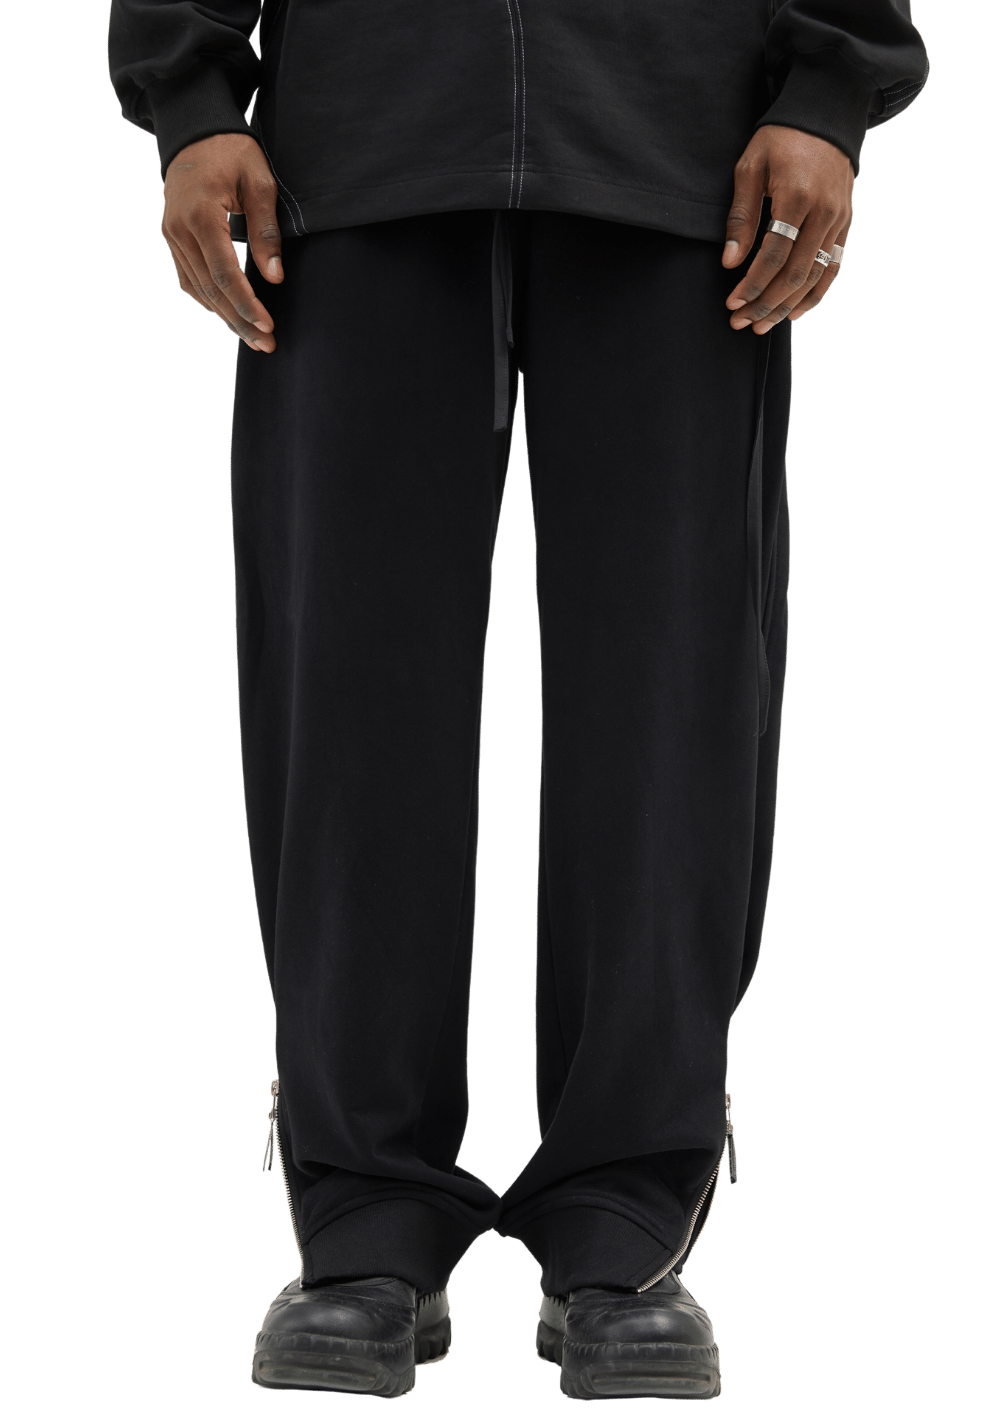 Adjustable Zipper Sweatpants - PSYLOS 1, Adjustable Zipper Sweatpants, Pants, BLIND NO PLAN, PSYLOS 1